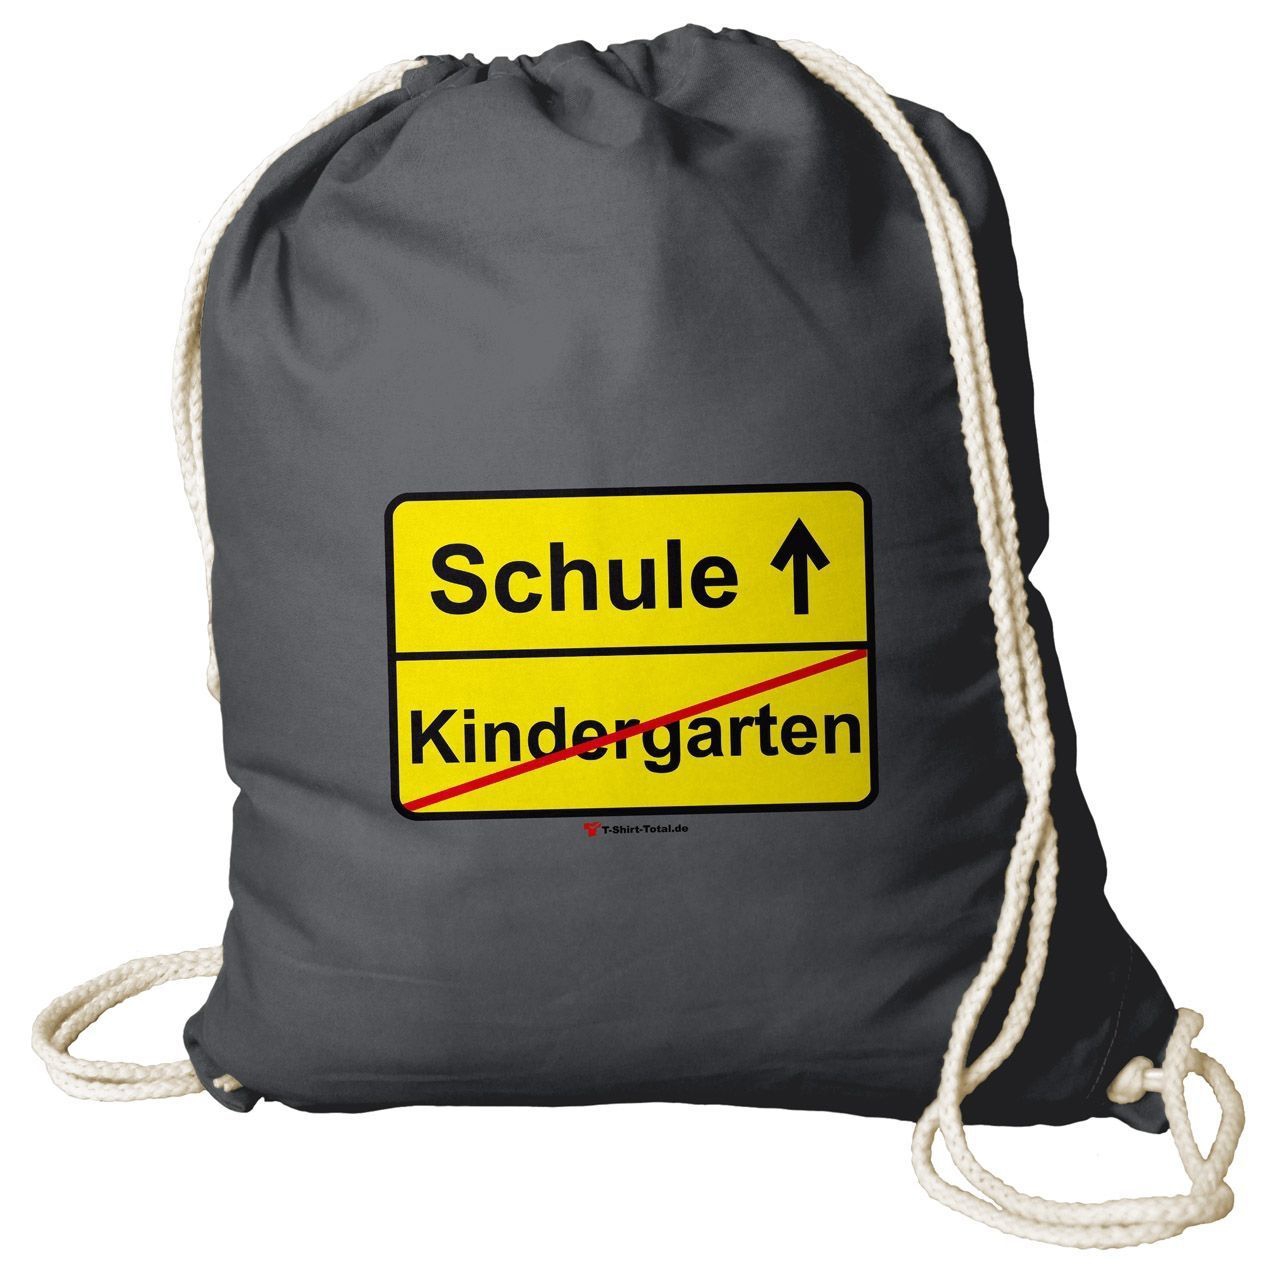 Kindergarten Schule Rucksack Beutel grau